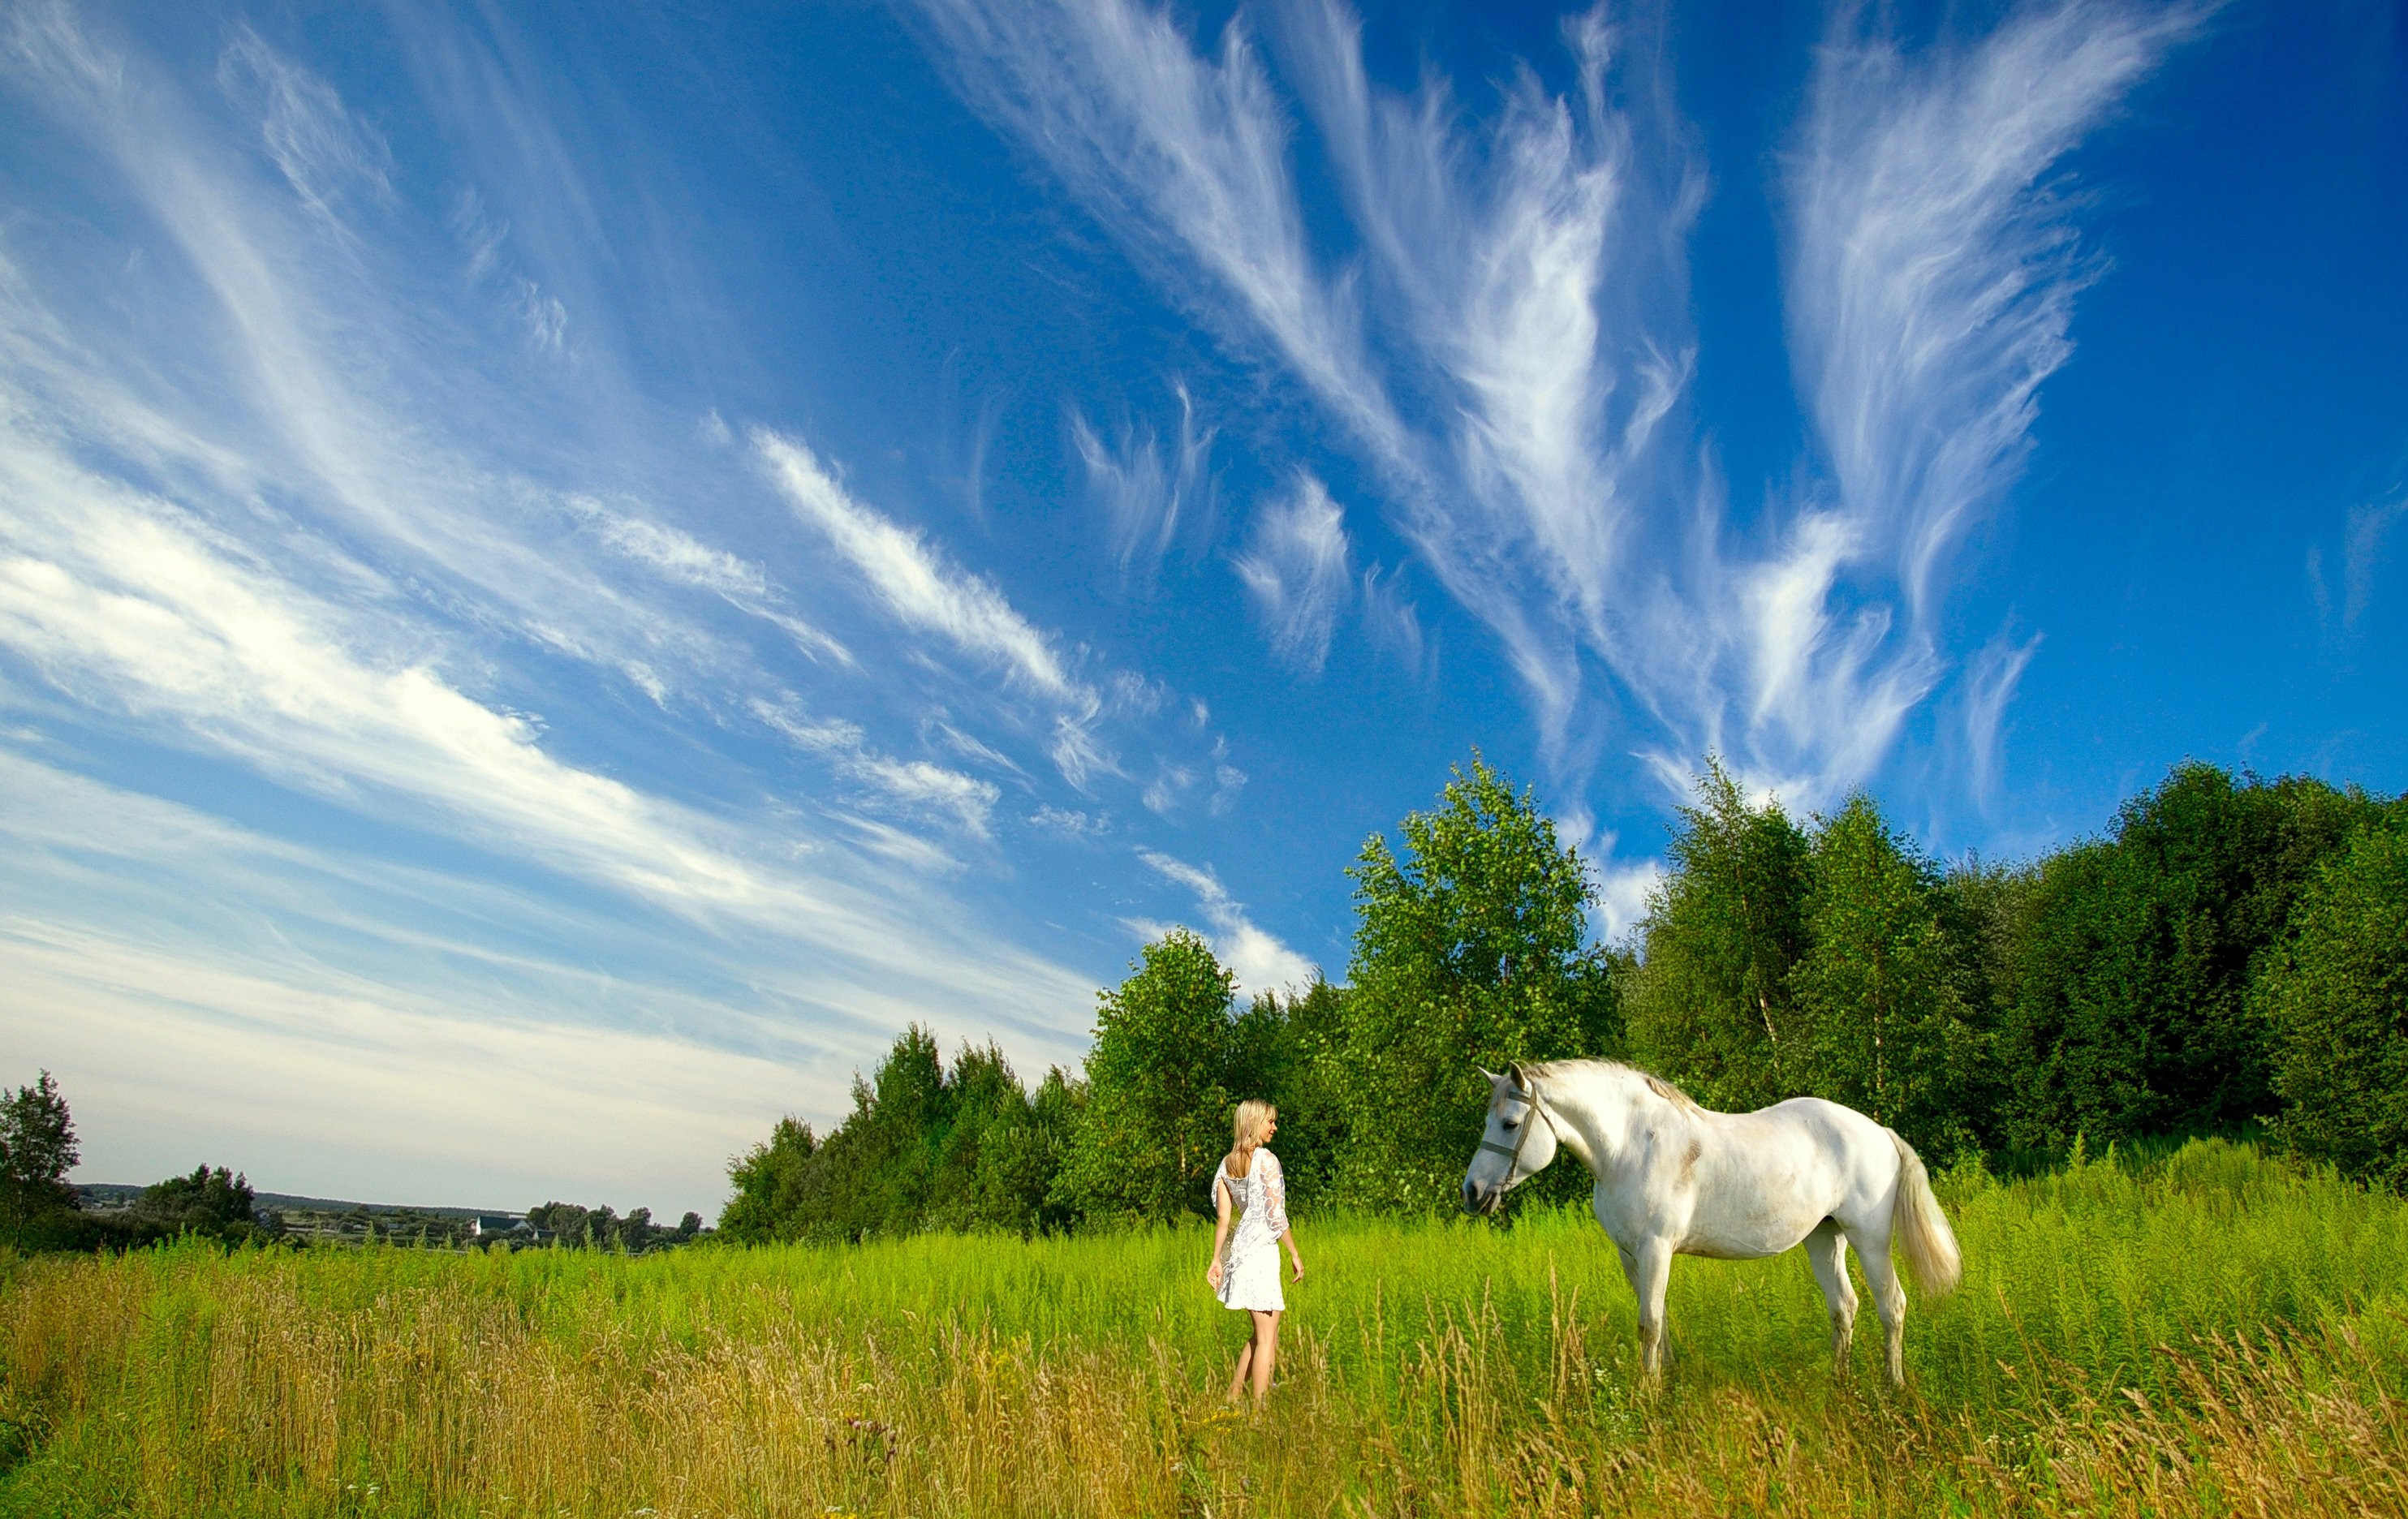 Небо на кону. Лошади на природе. Лошадь в поле. Красивые лошади на природе. Белый конь в поле.